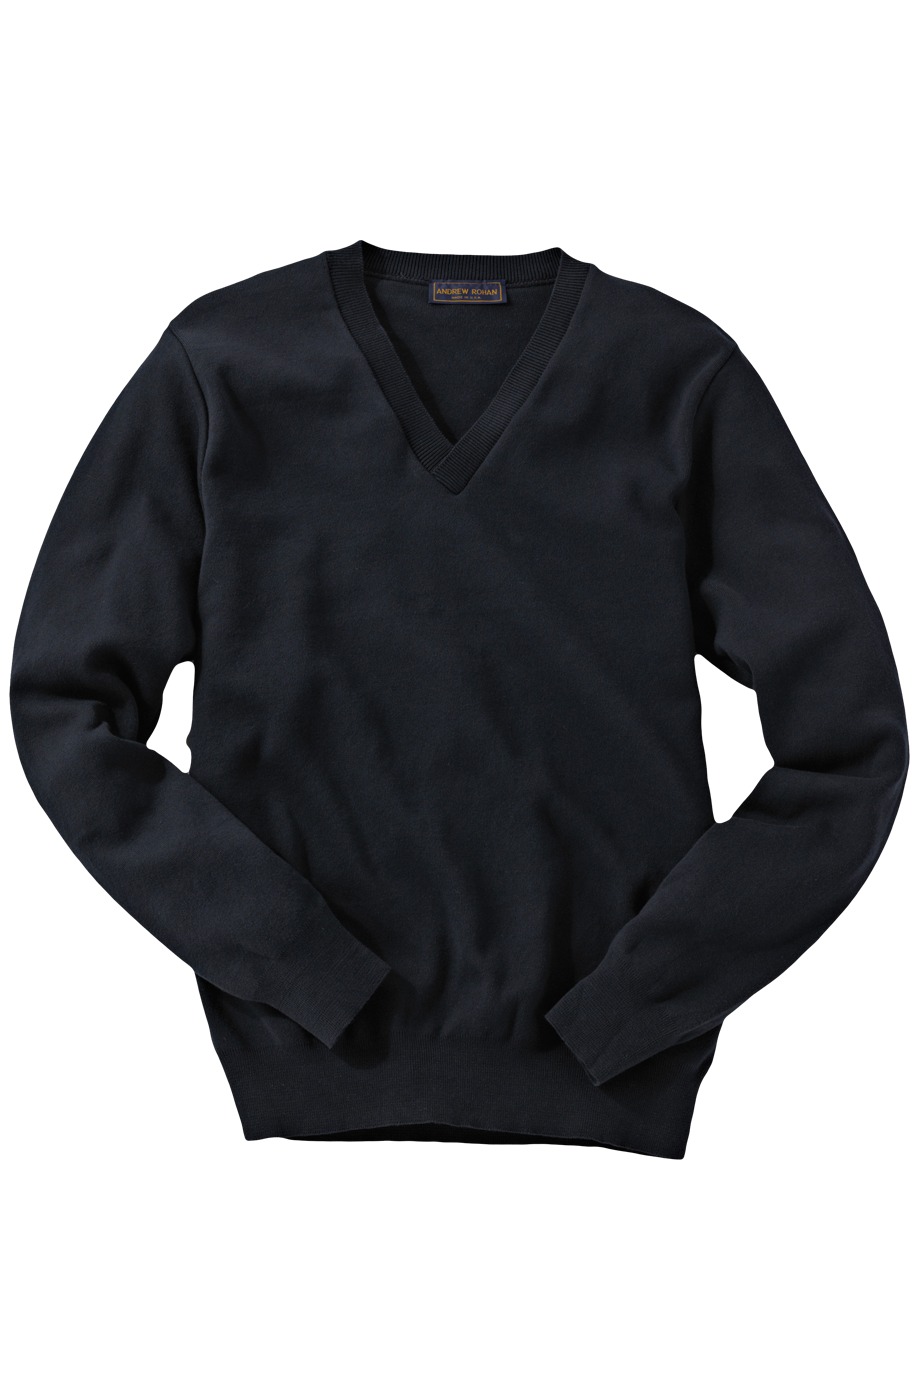 Edwards Garment 700 - Men's Cotton Cashmere V-Neck Sweater